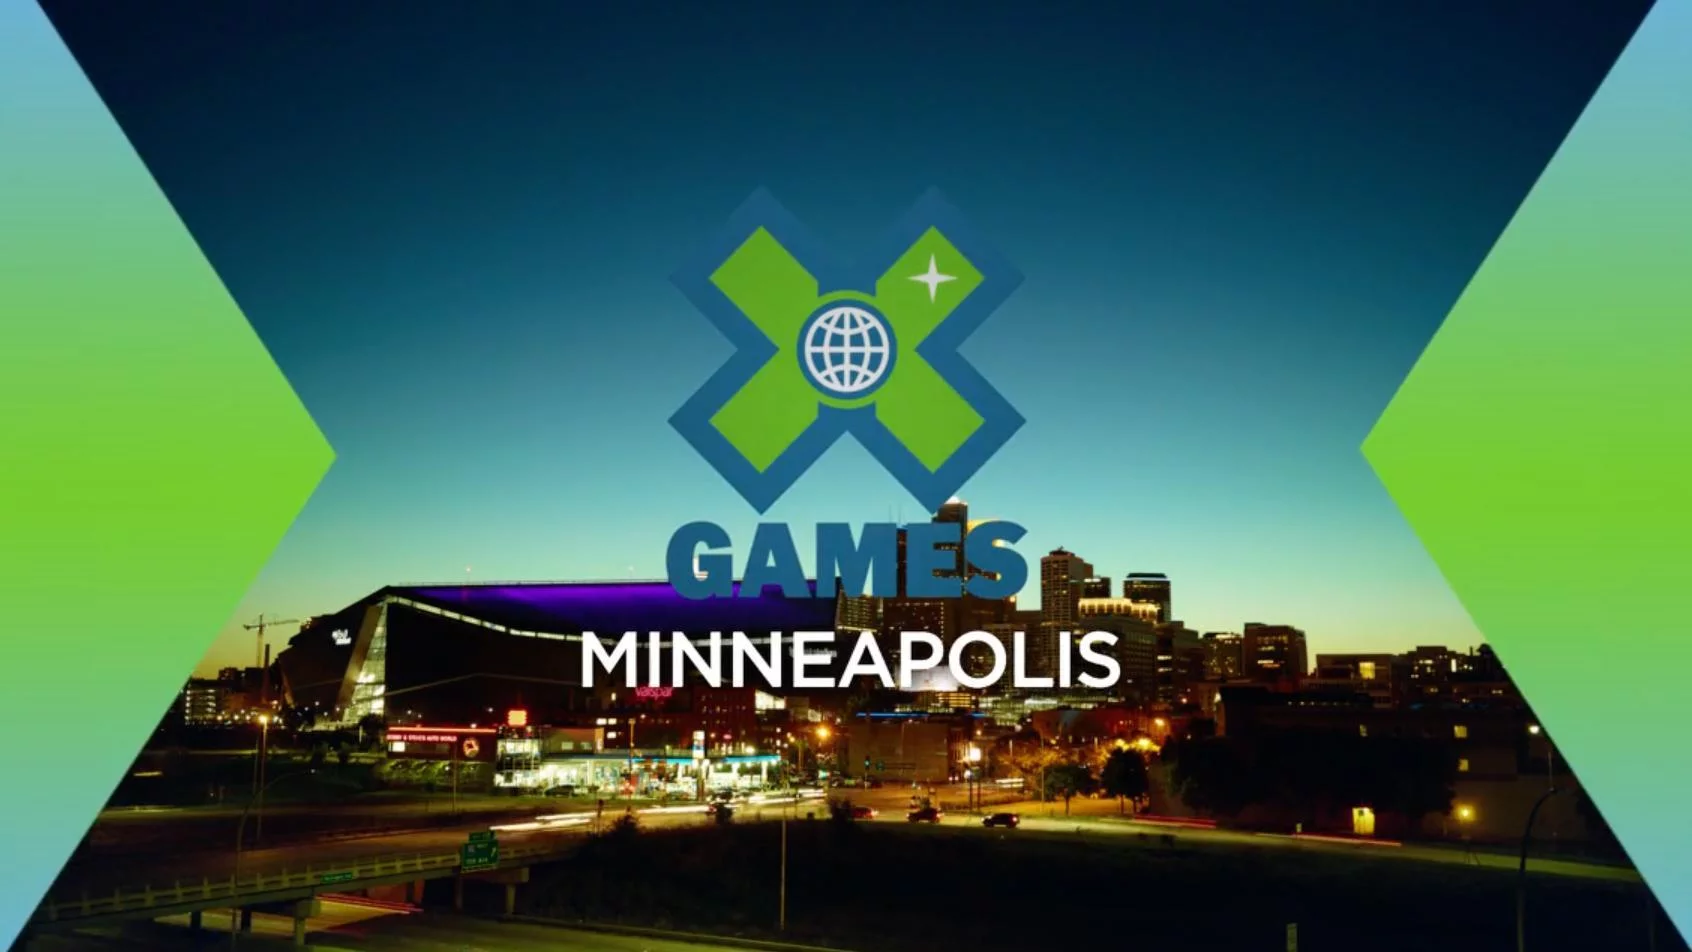 X games Minneapolis 2019 TV 2 Sport